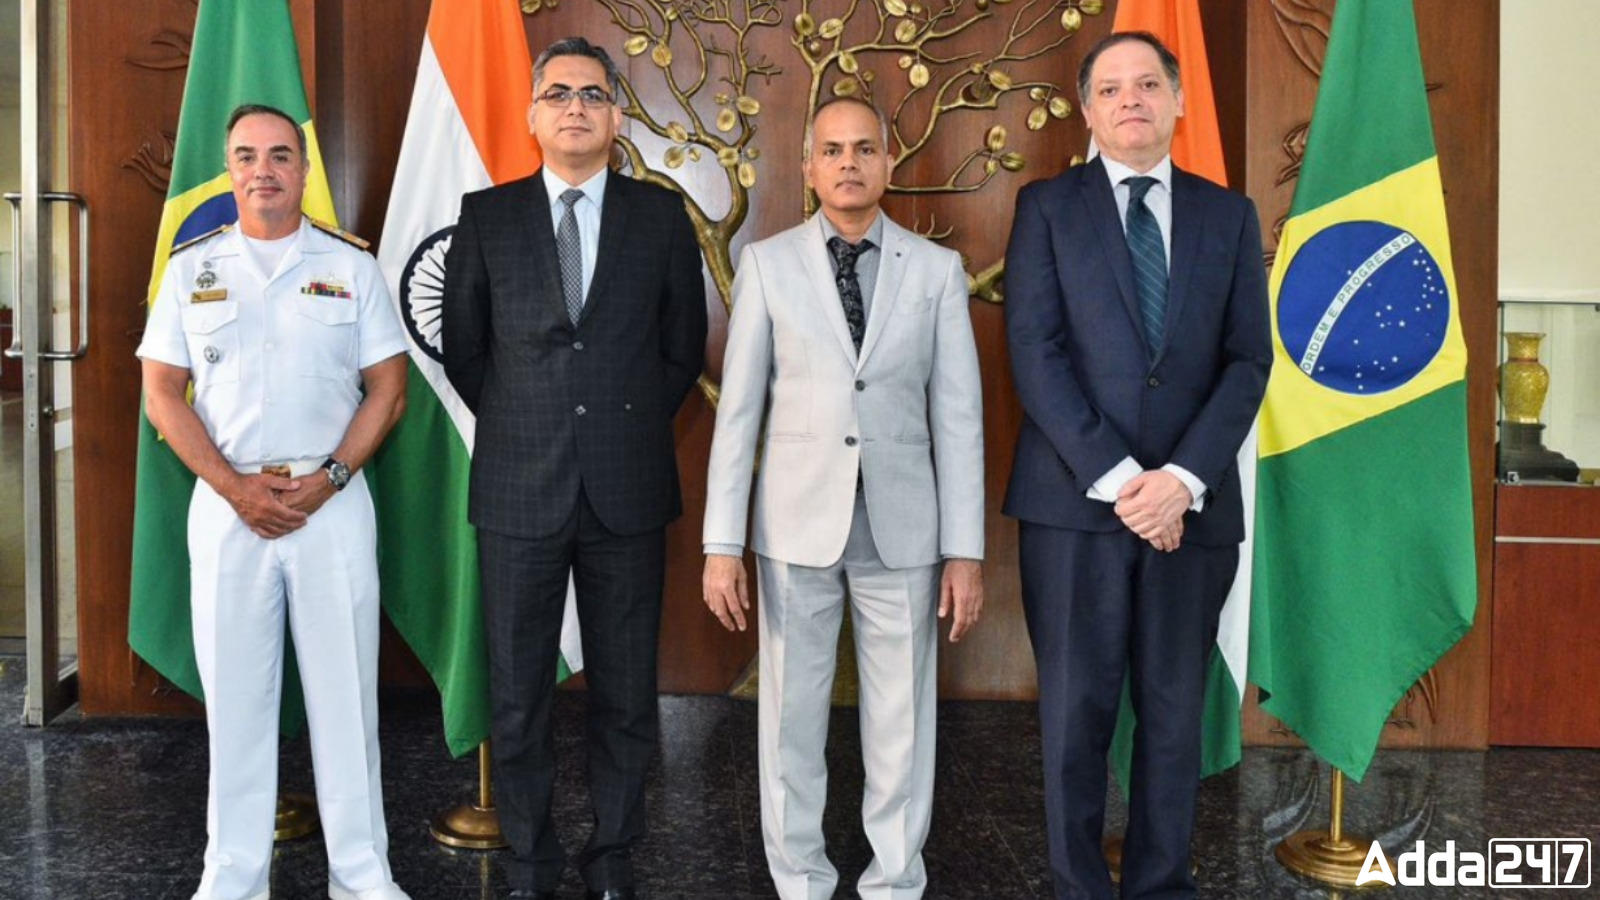 India and Brazil Conduct Inaugural '2+2' Dialogue